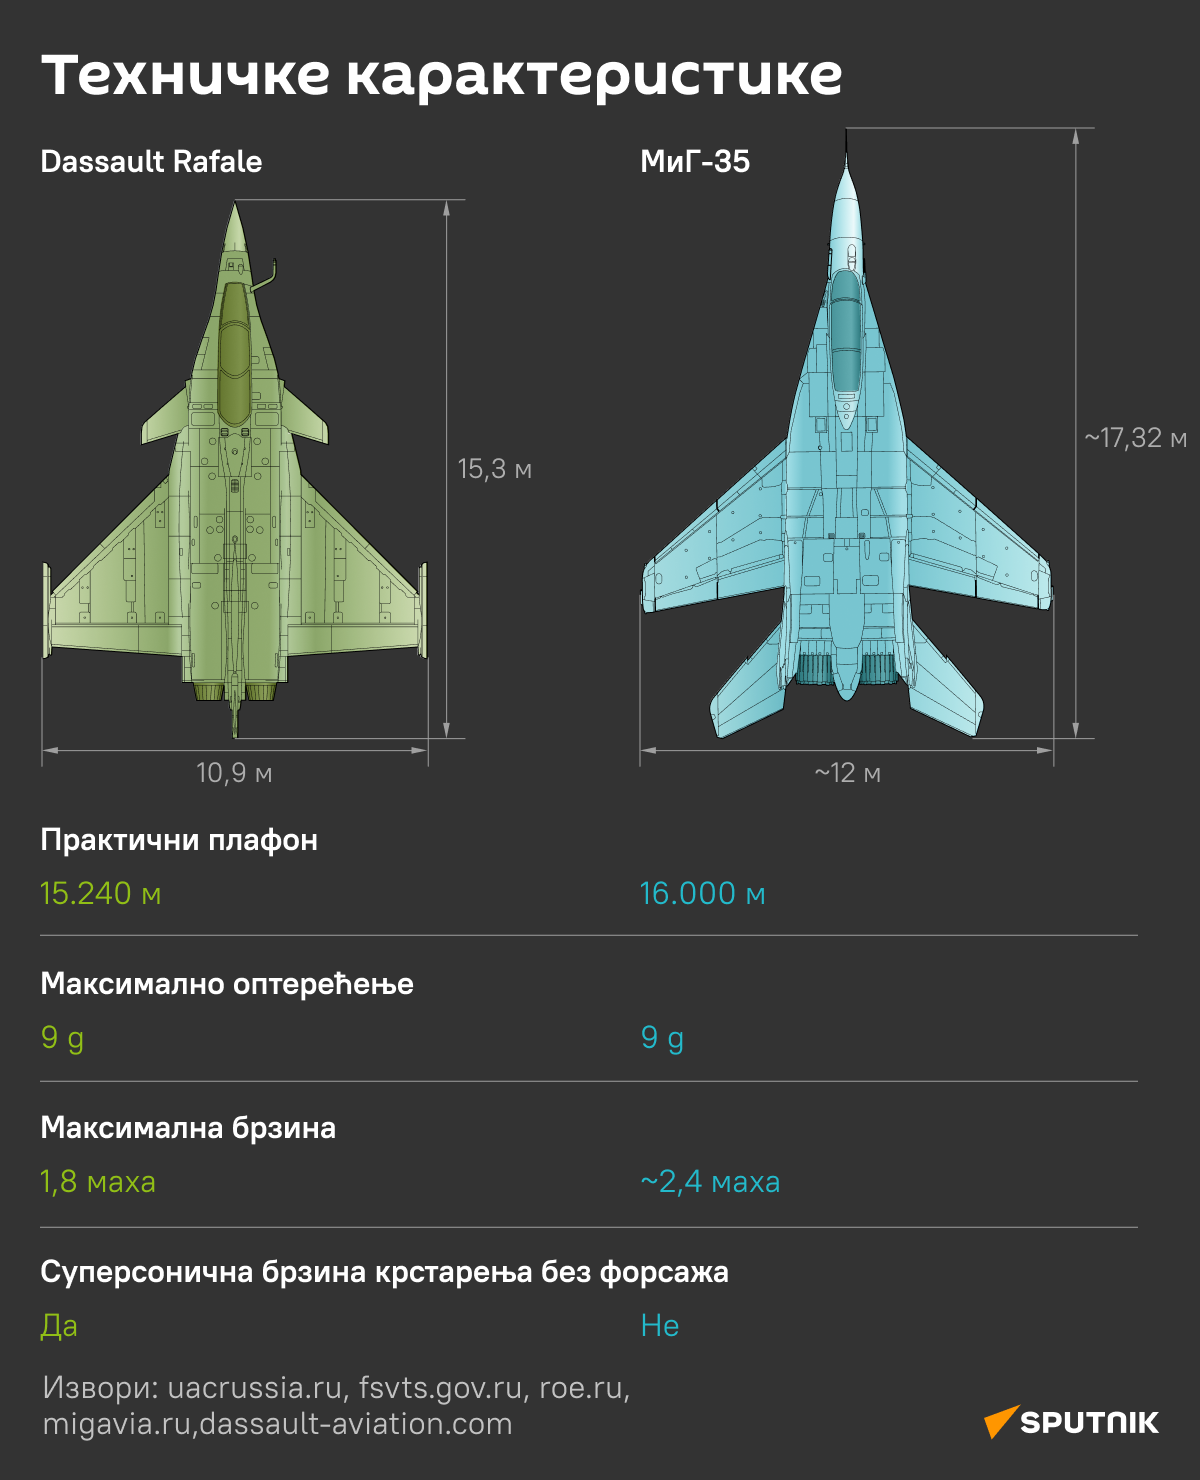 Rafal vs MiG 1 - Sputnik Srbija